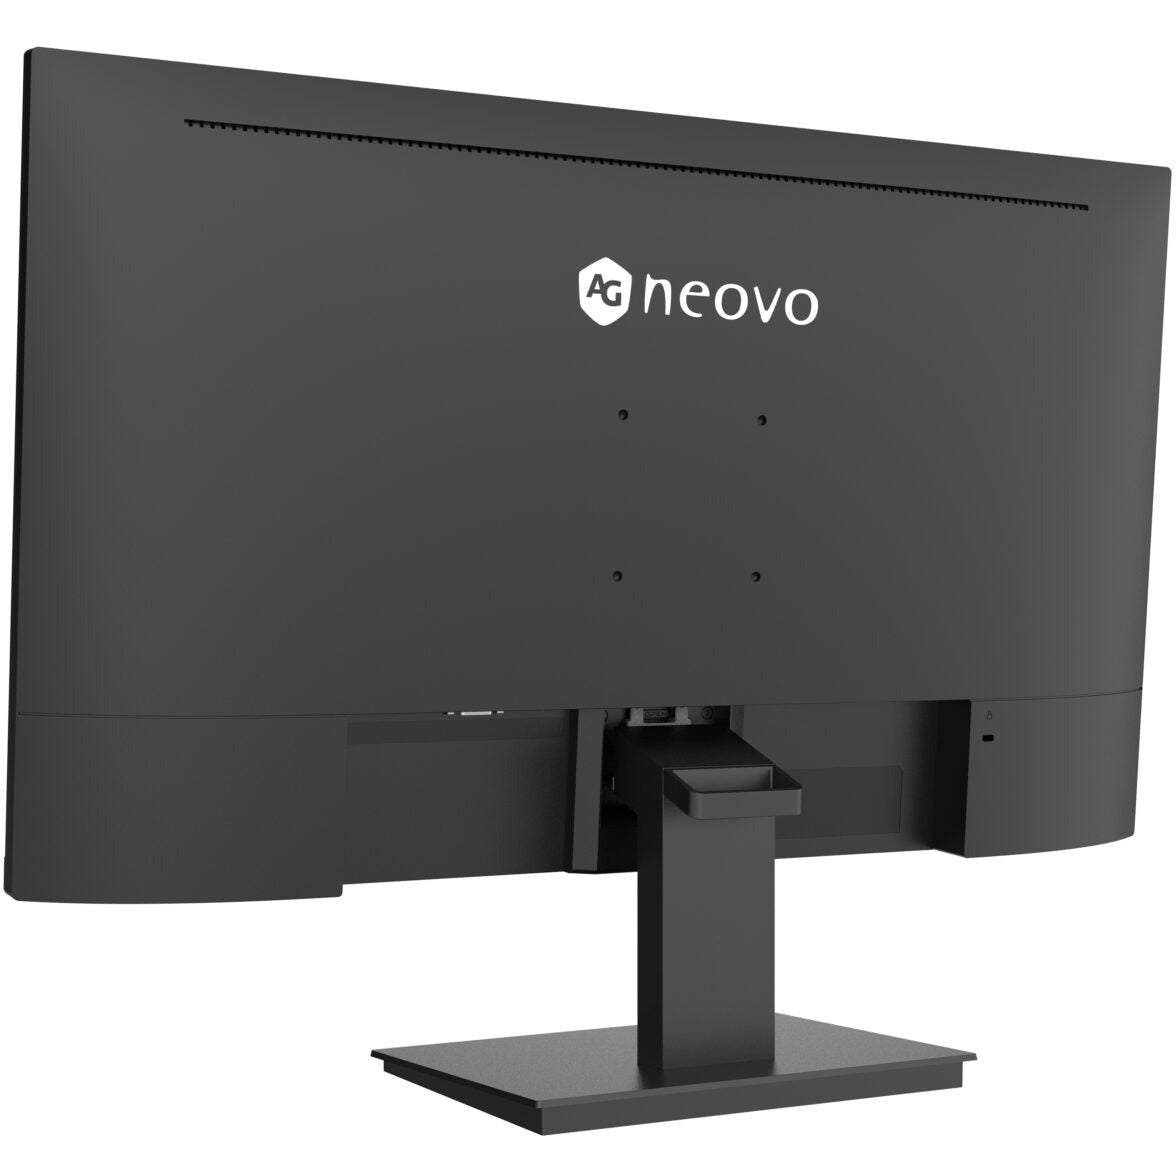 AG Neovo LA-2702  27-Inch Full HD LCD Monitor